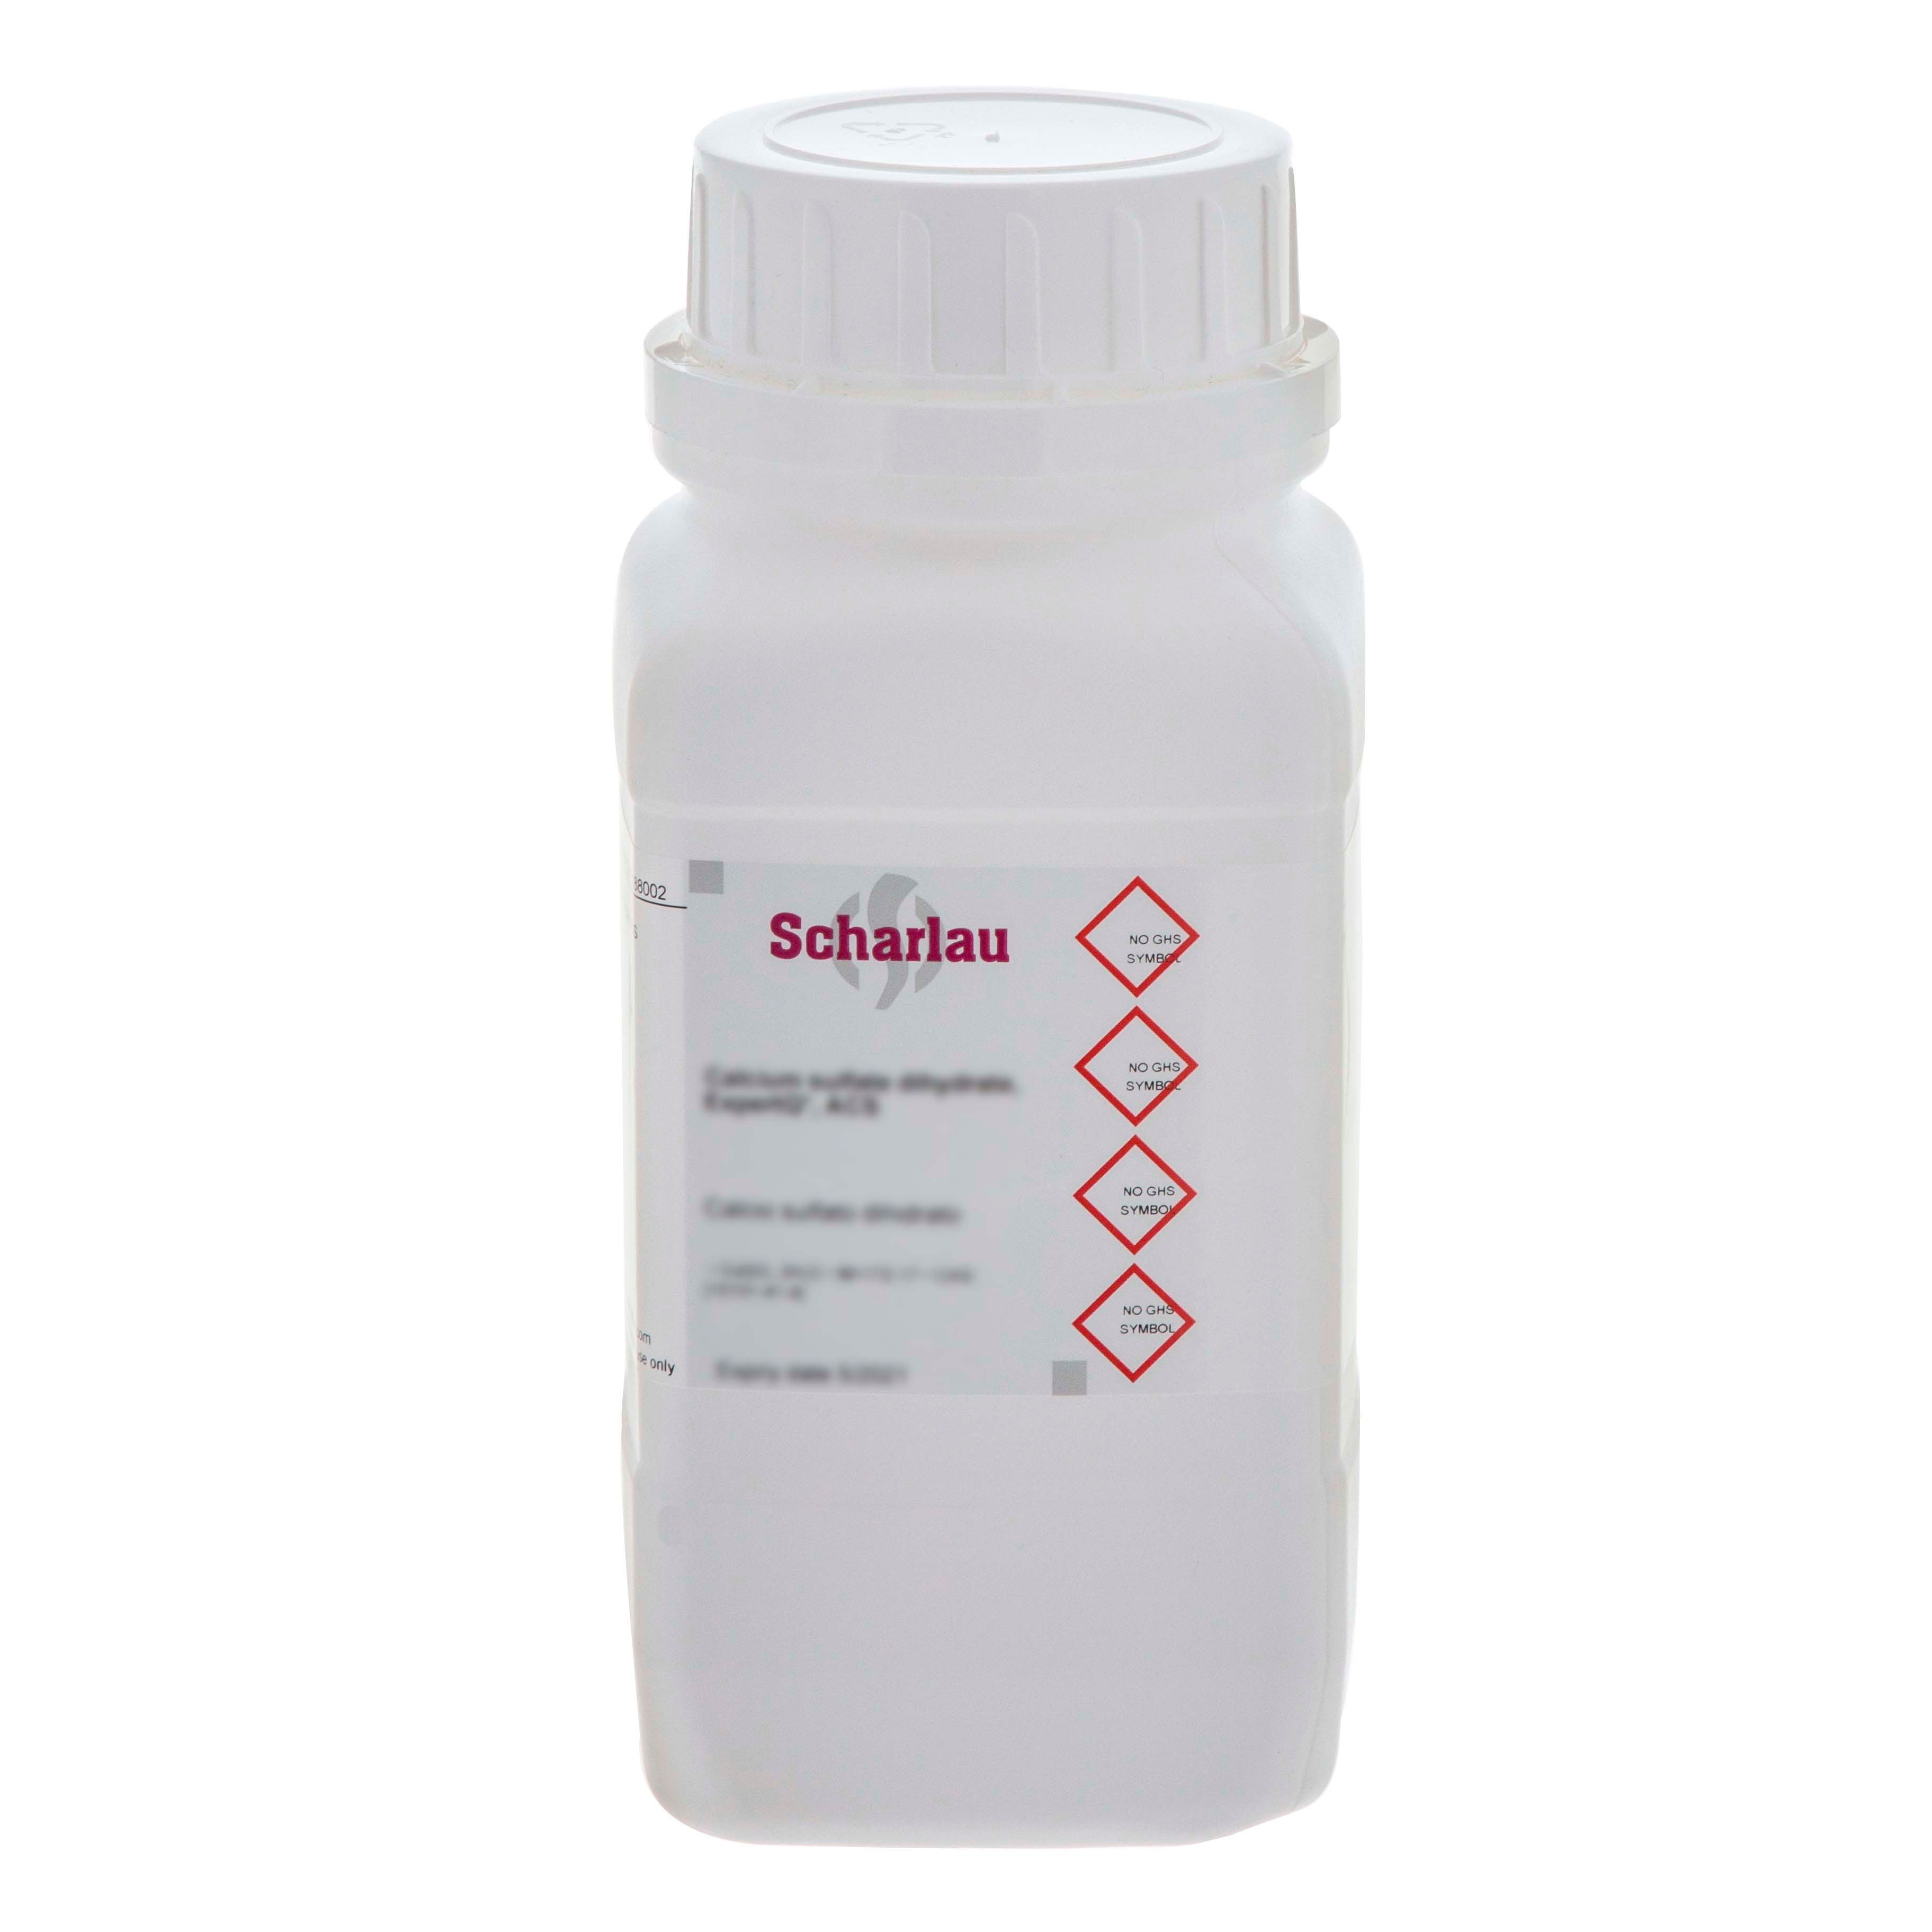 Fluoresceína sódica, C.I. 45350, EssentQ®